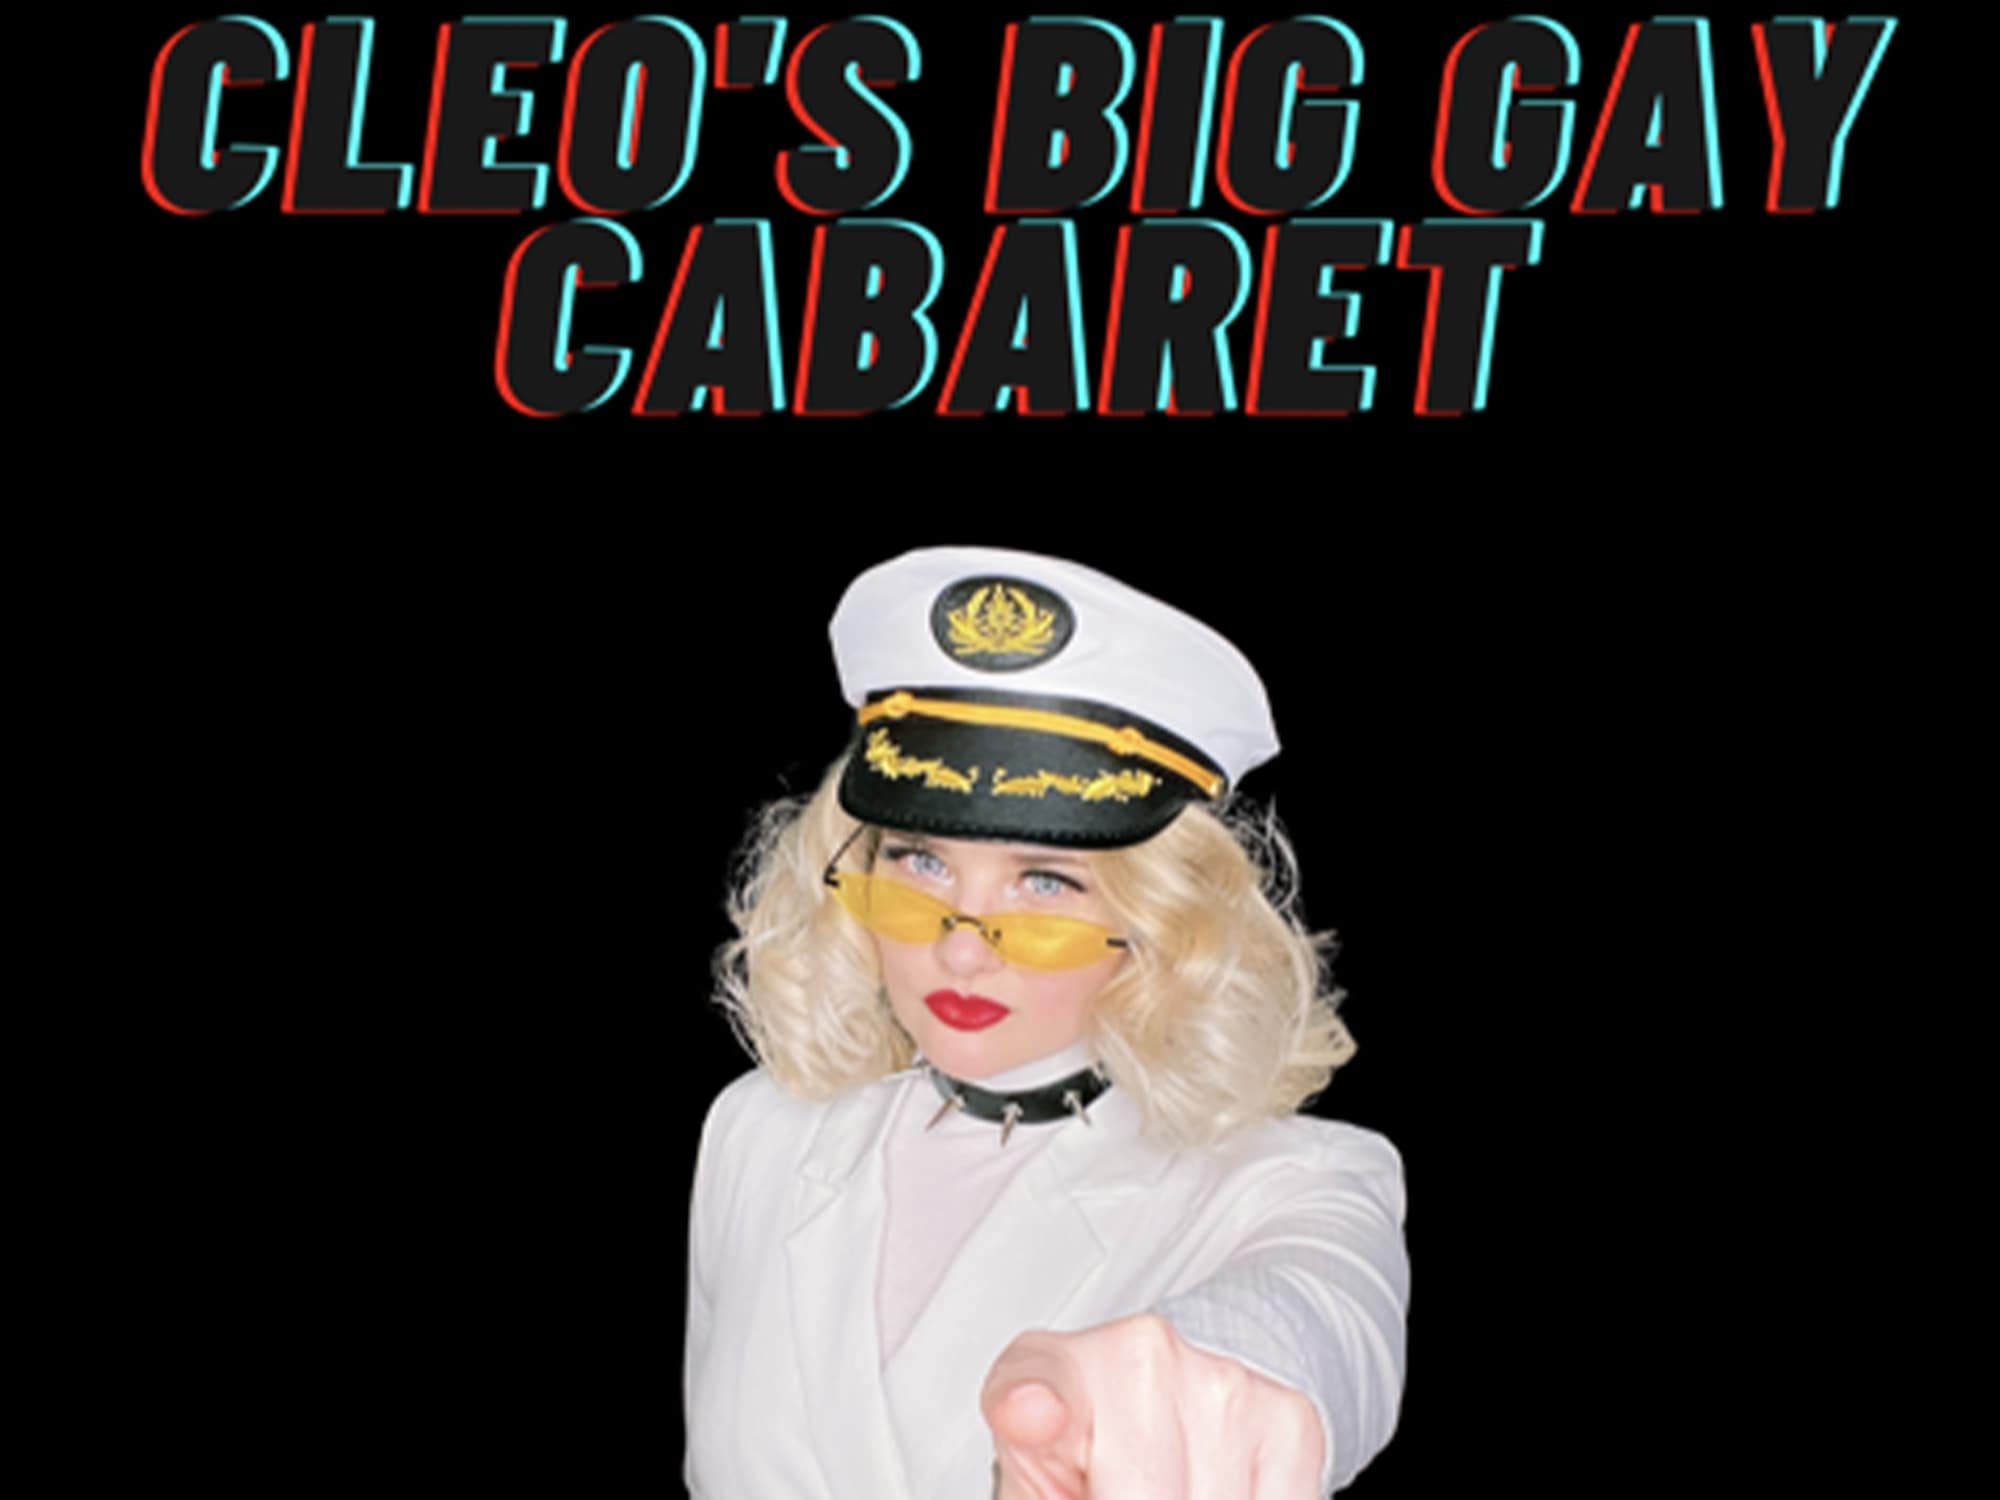 Cleo's Big Gay Cabaret performance.